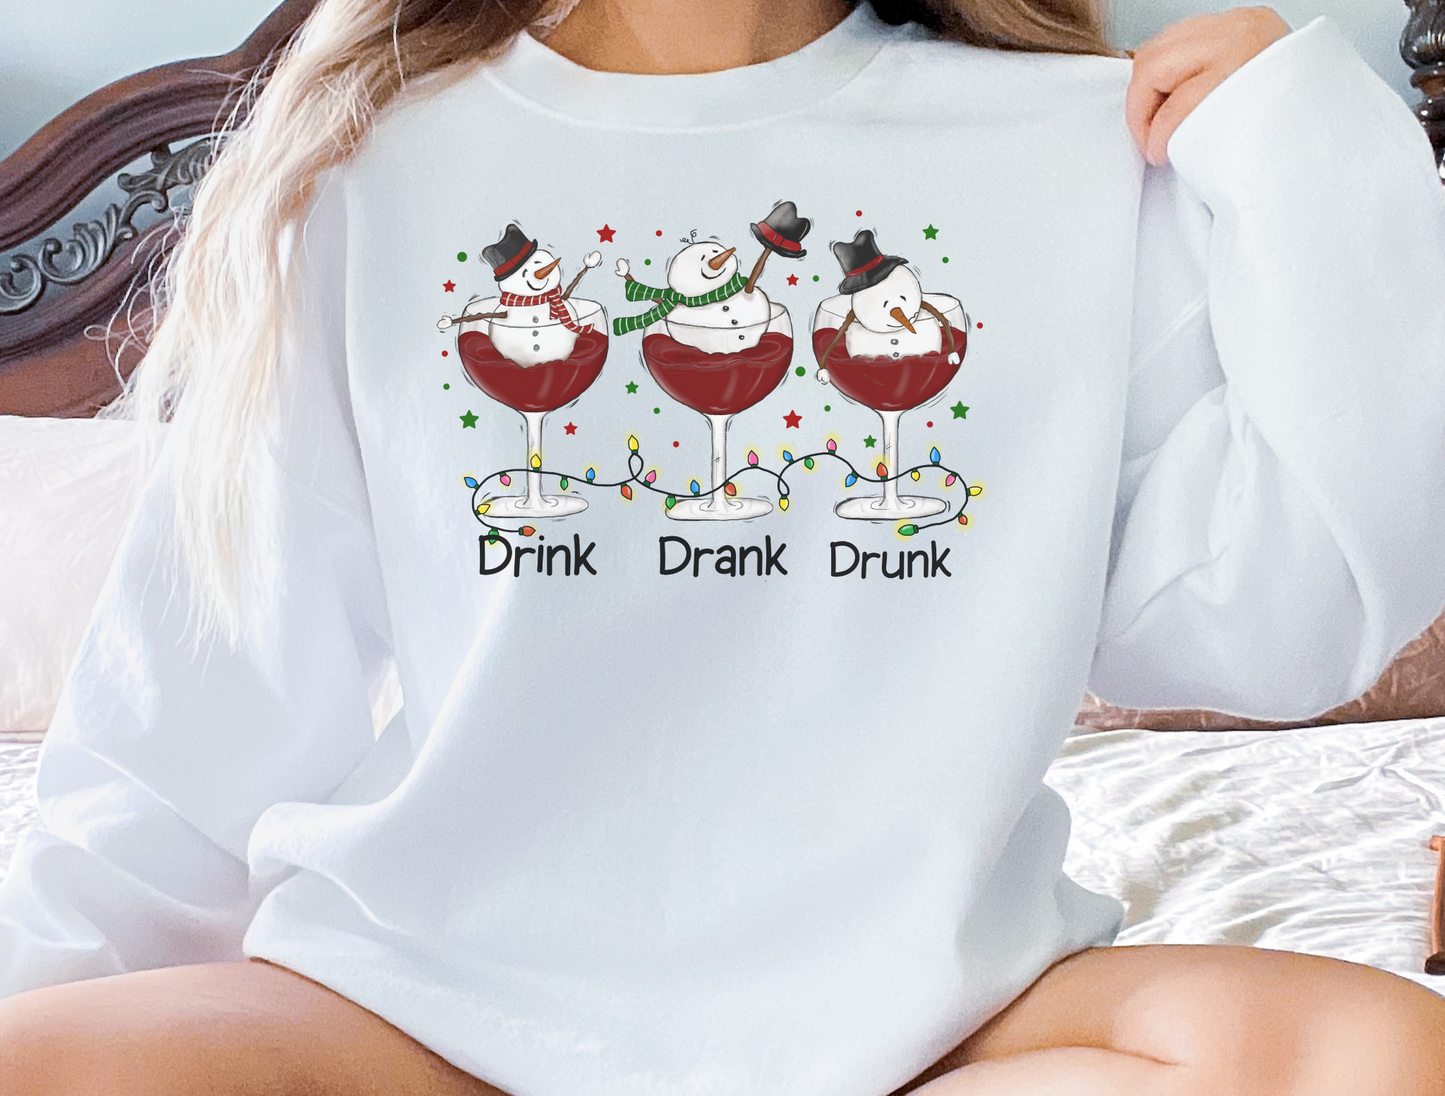 DRINK DRANK DRUNK CHRISTMAS Sweater